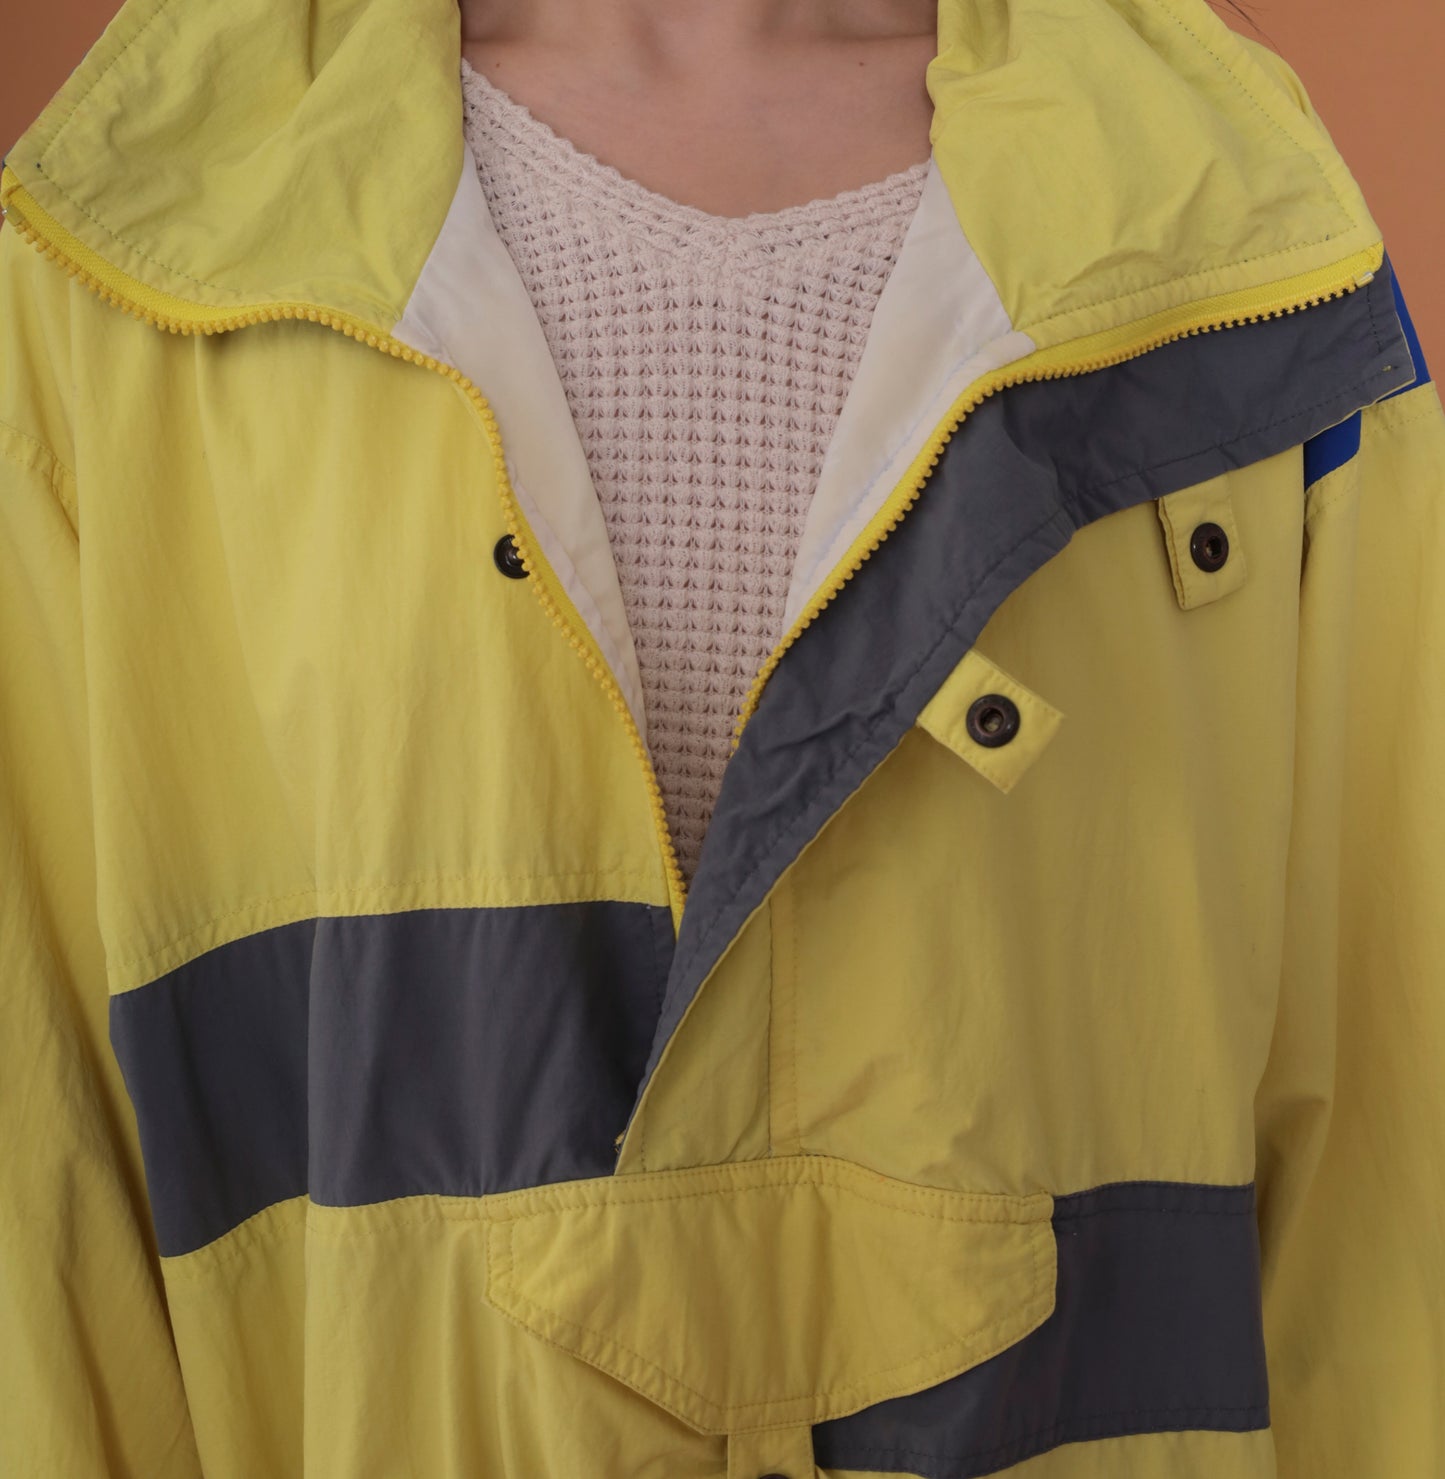 90s Asymmetrical Yellow Jacket